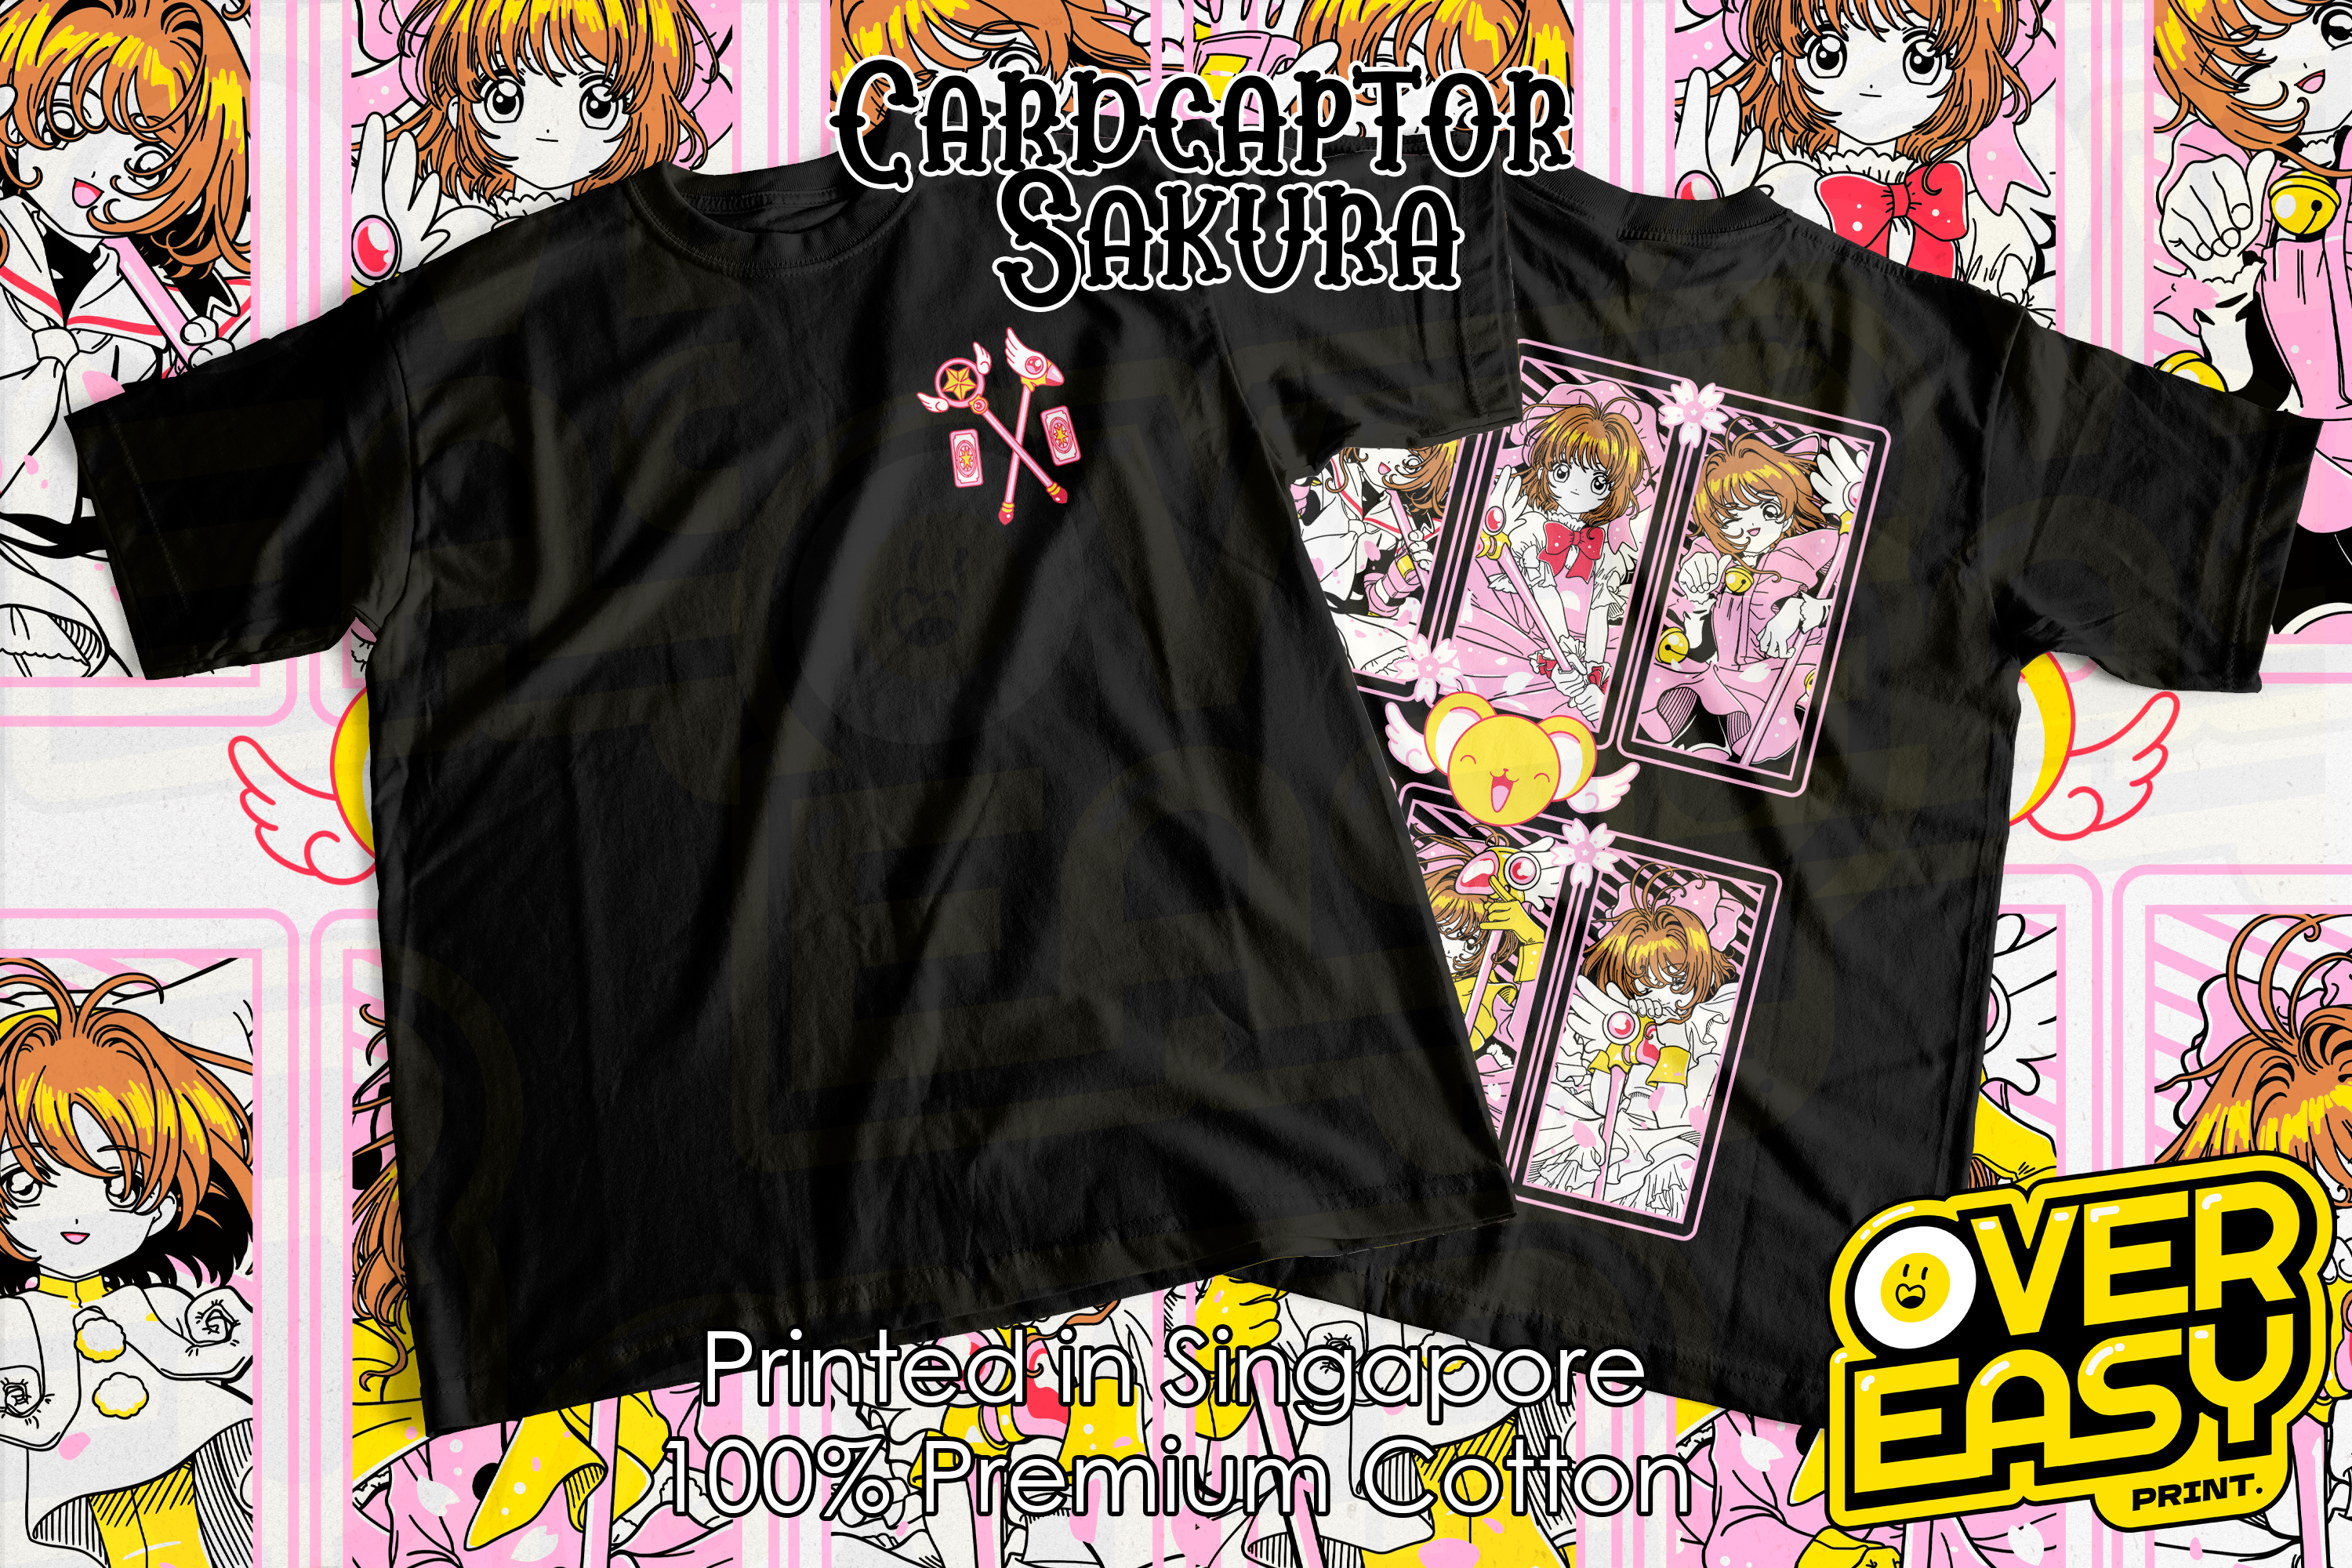 Cardcaptor Sakura Anime Fanart T-Shirt